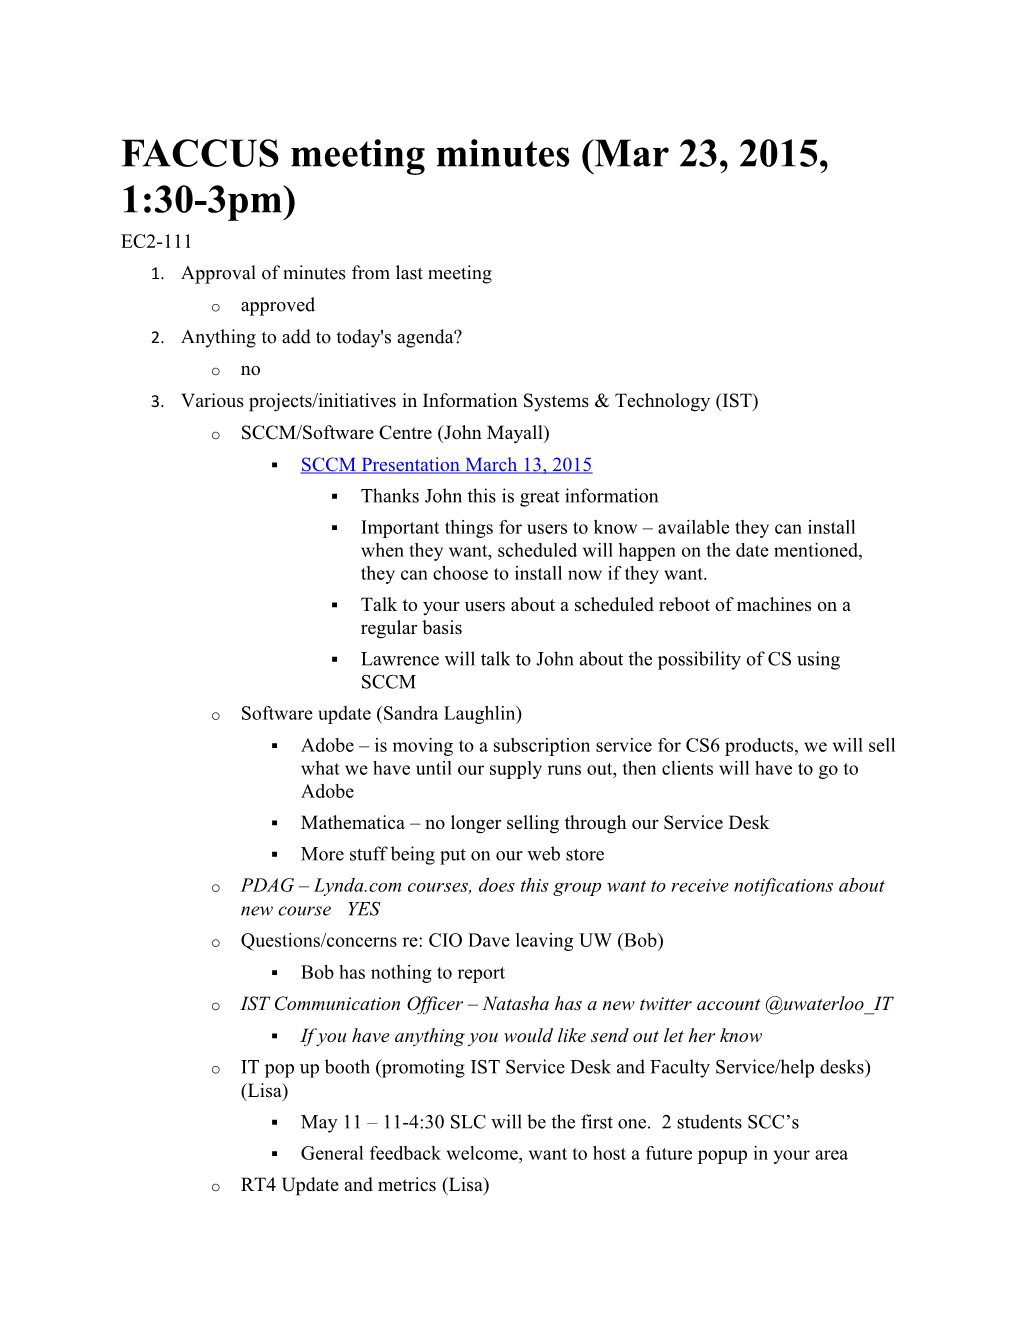 FACCUS Meeting Minutes (Mar 23, 2015, 1:30-3Pm)